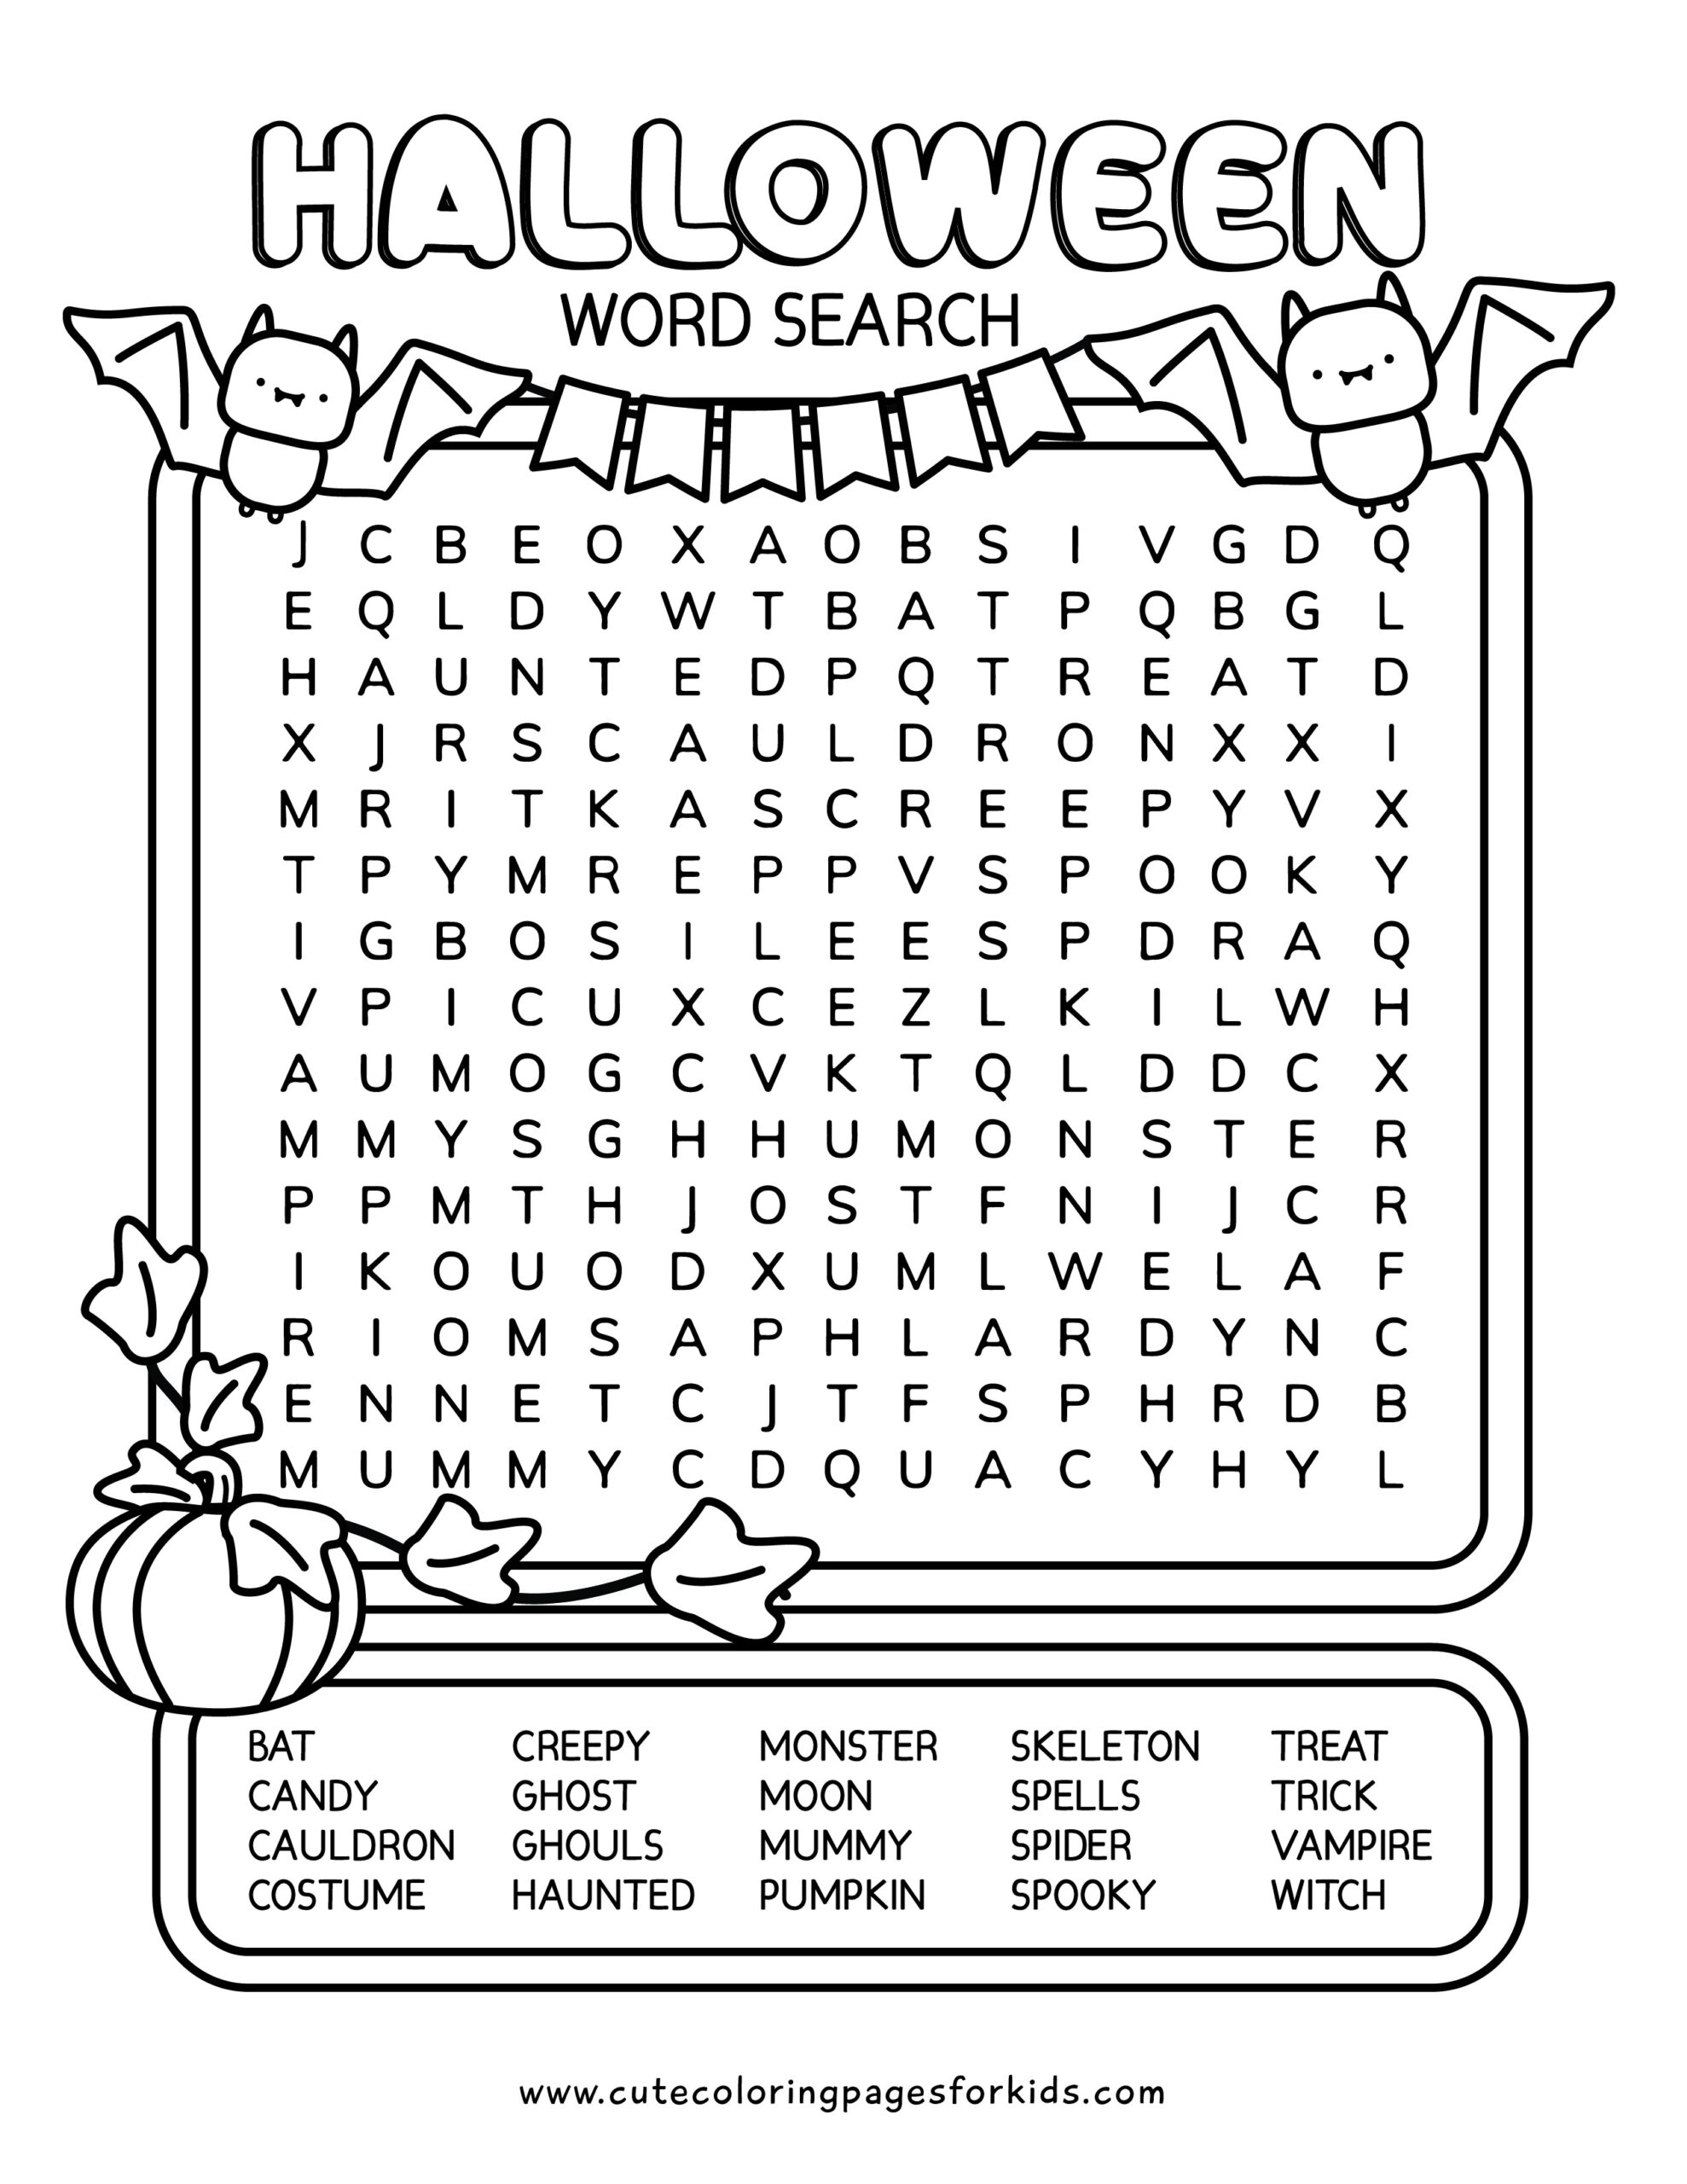 Halloween word search printables